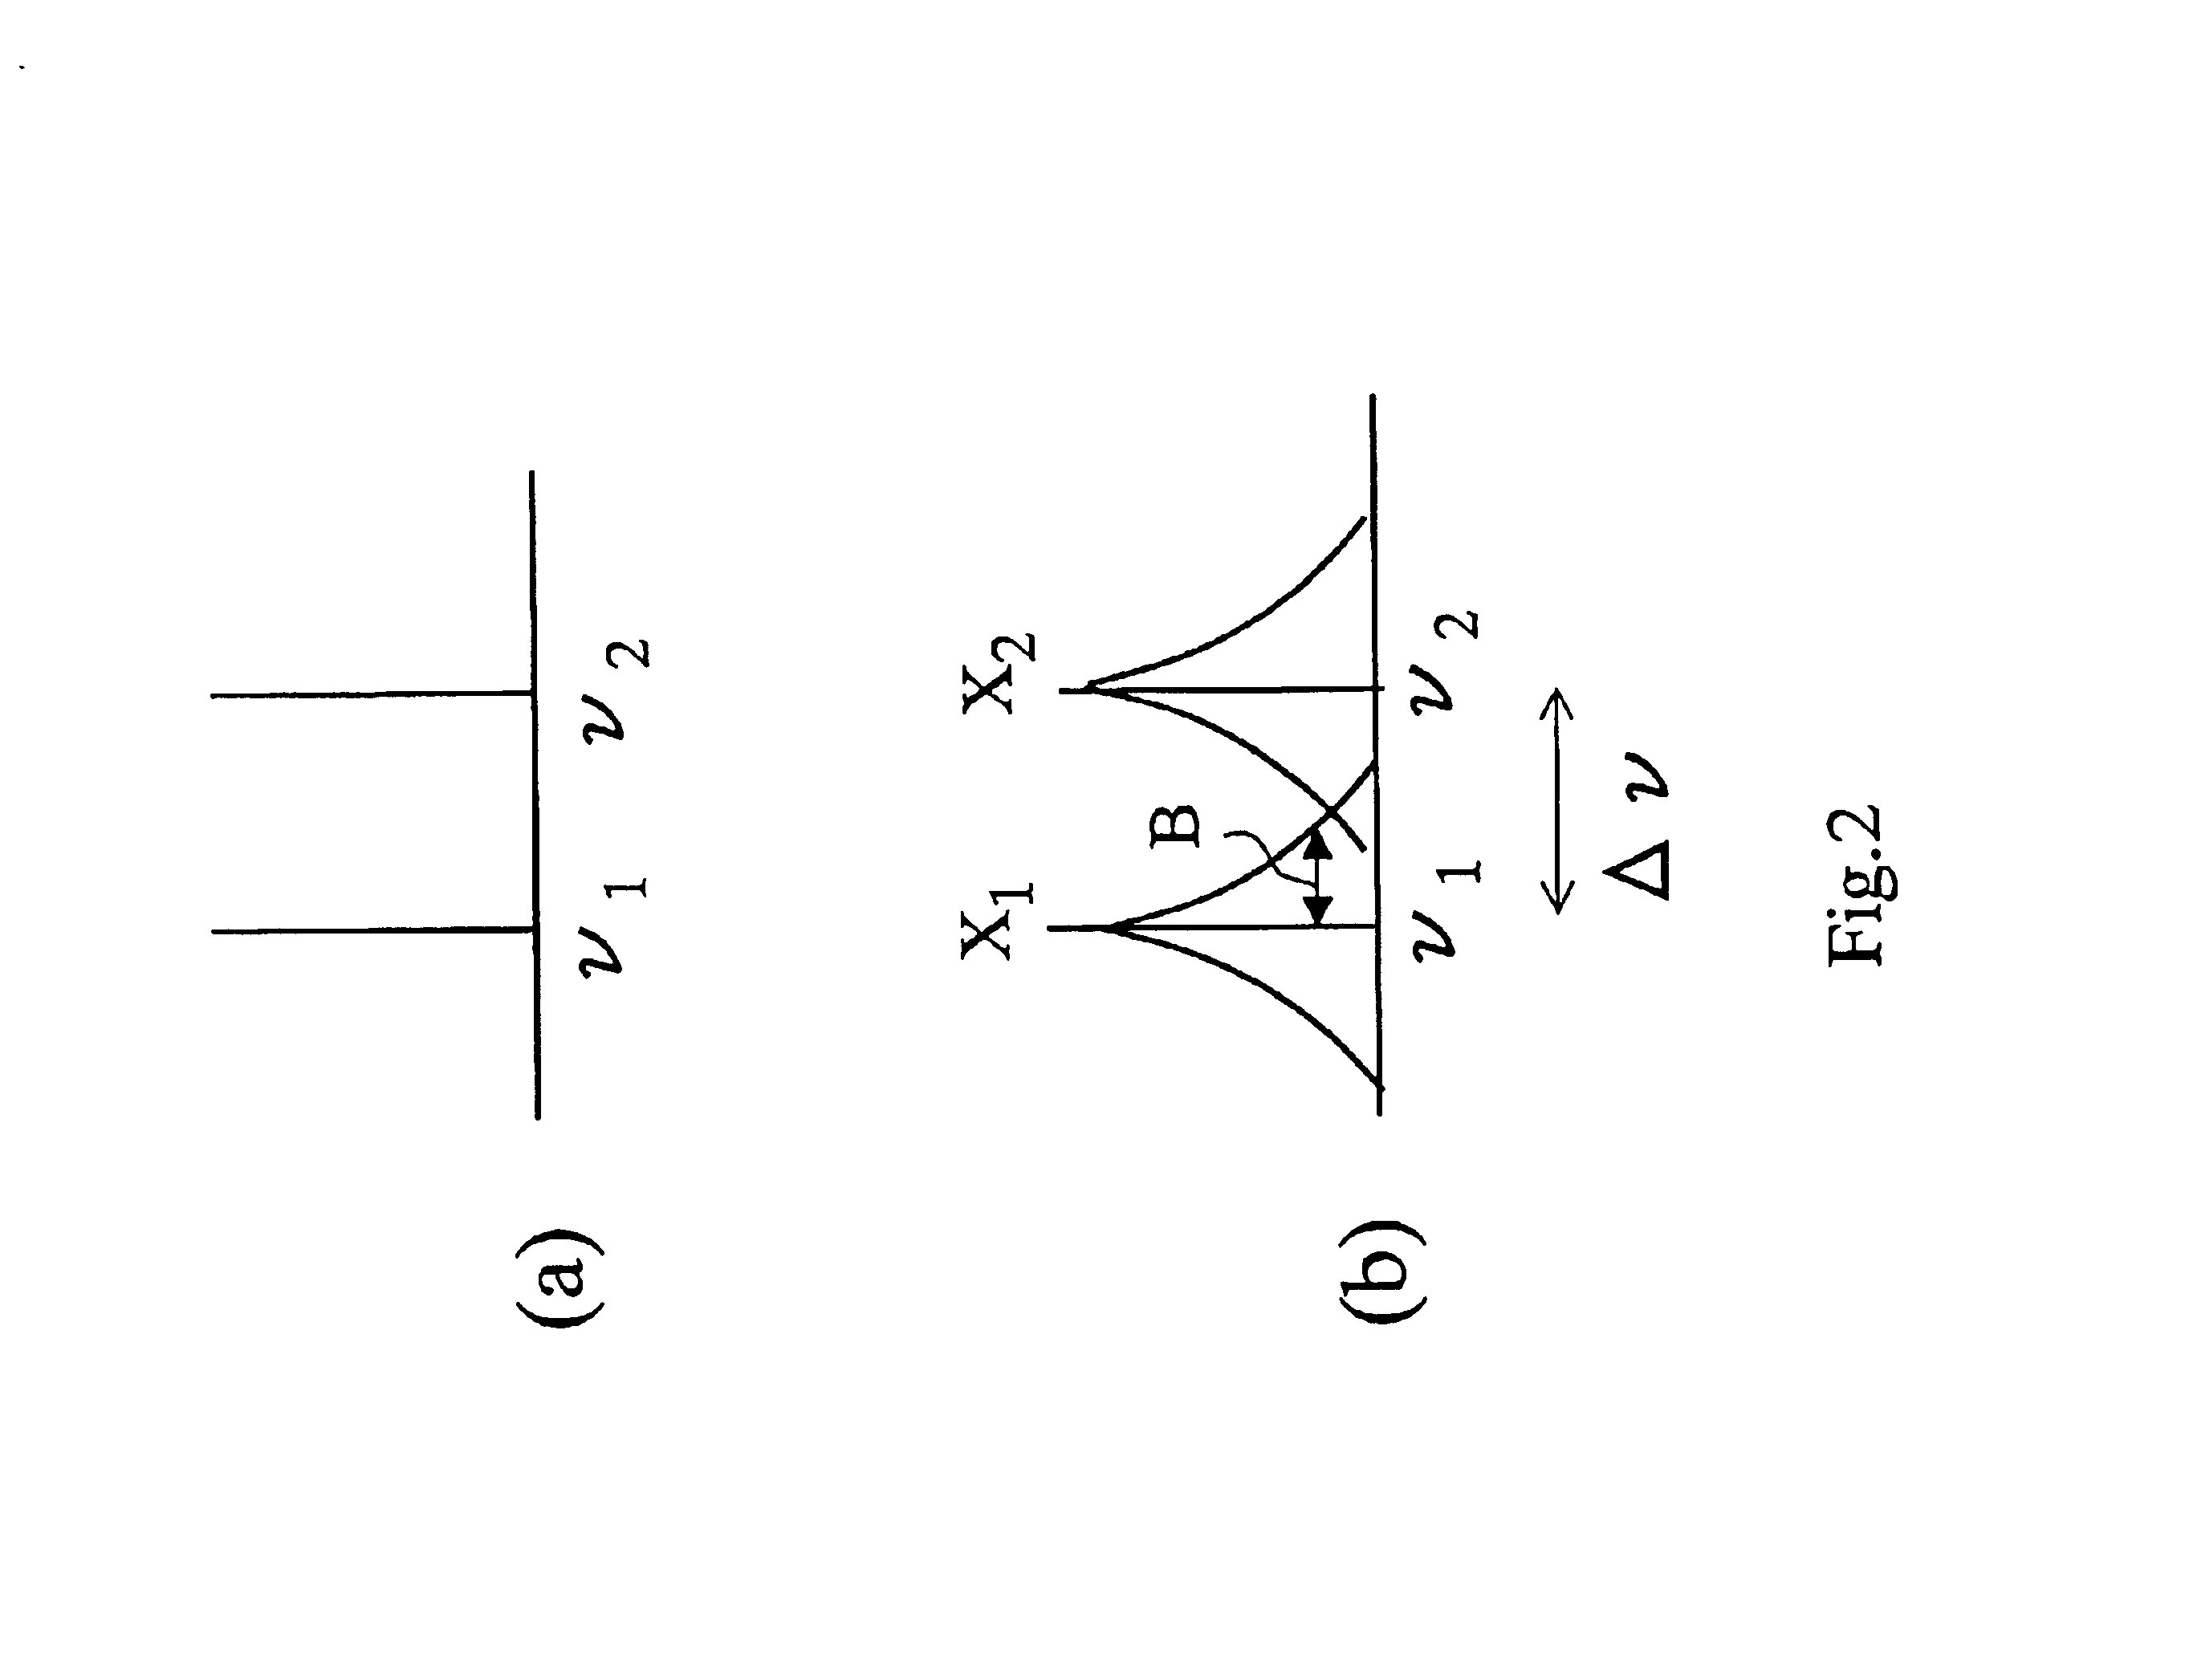 Optical circuit with harmonic generator